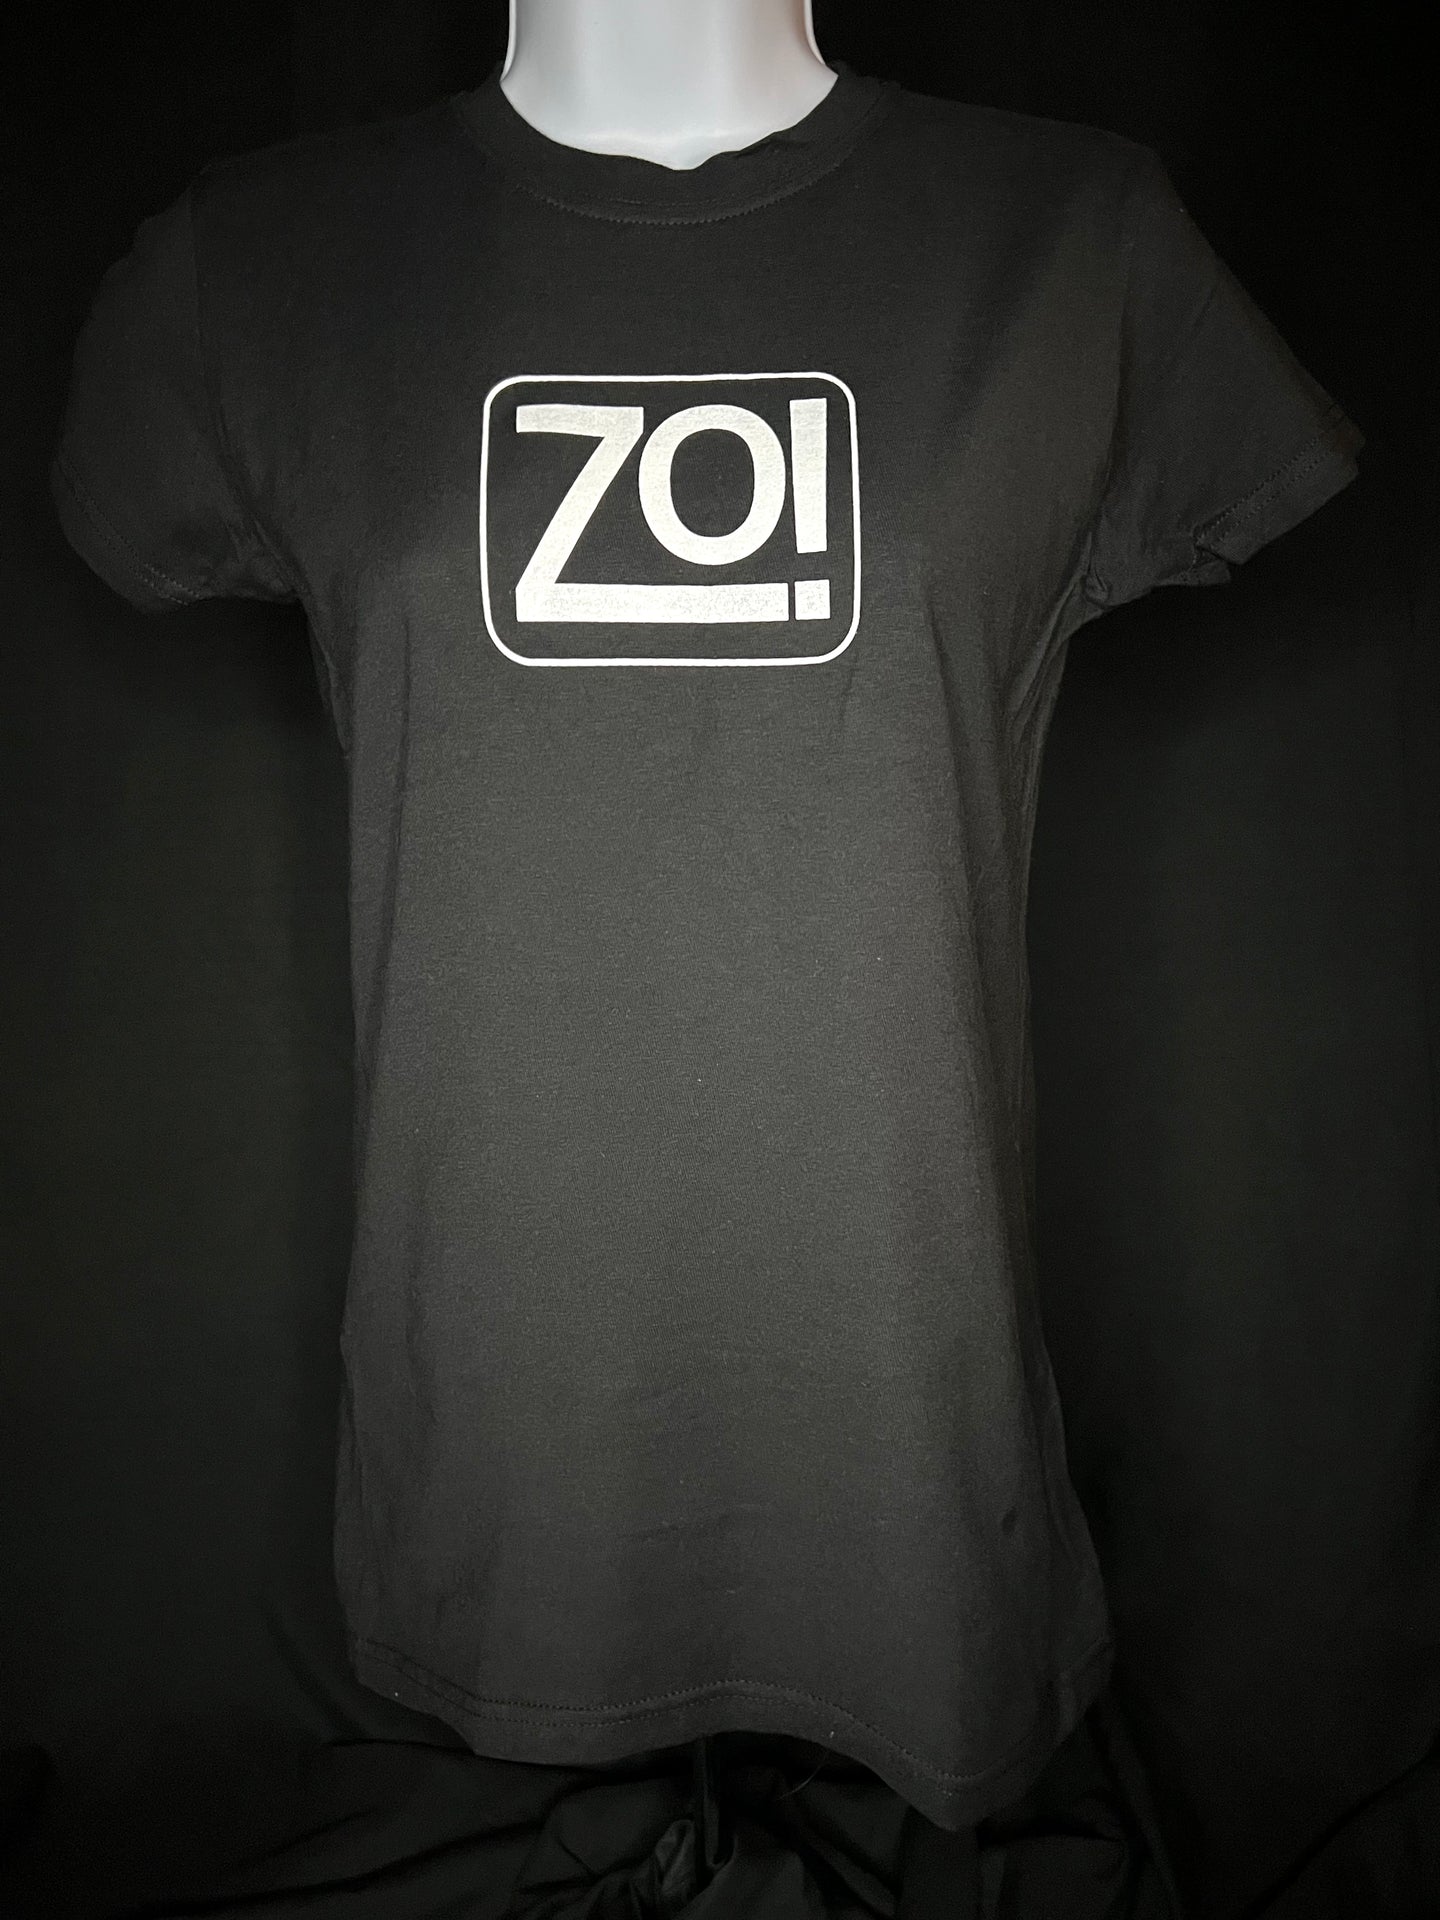 Zo! Black T-Shirt (Women's Fitted)